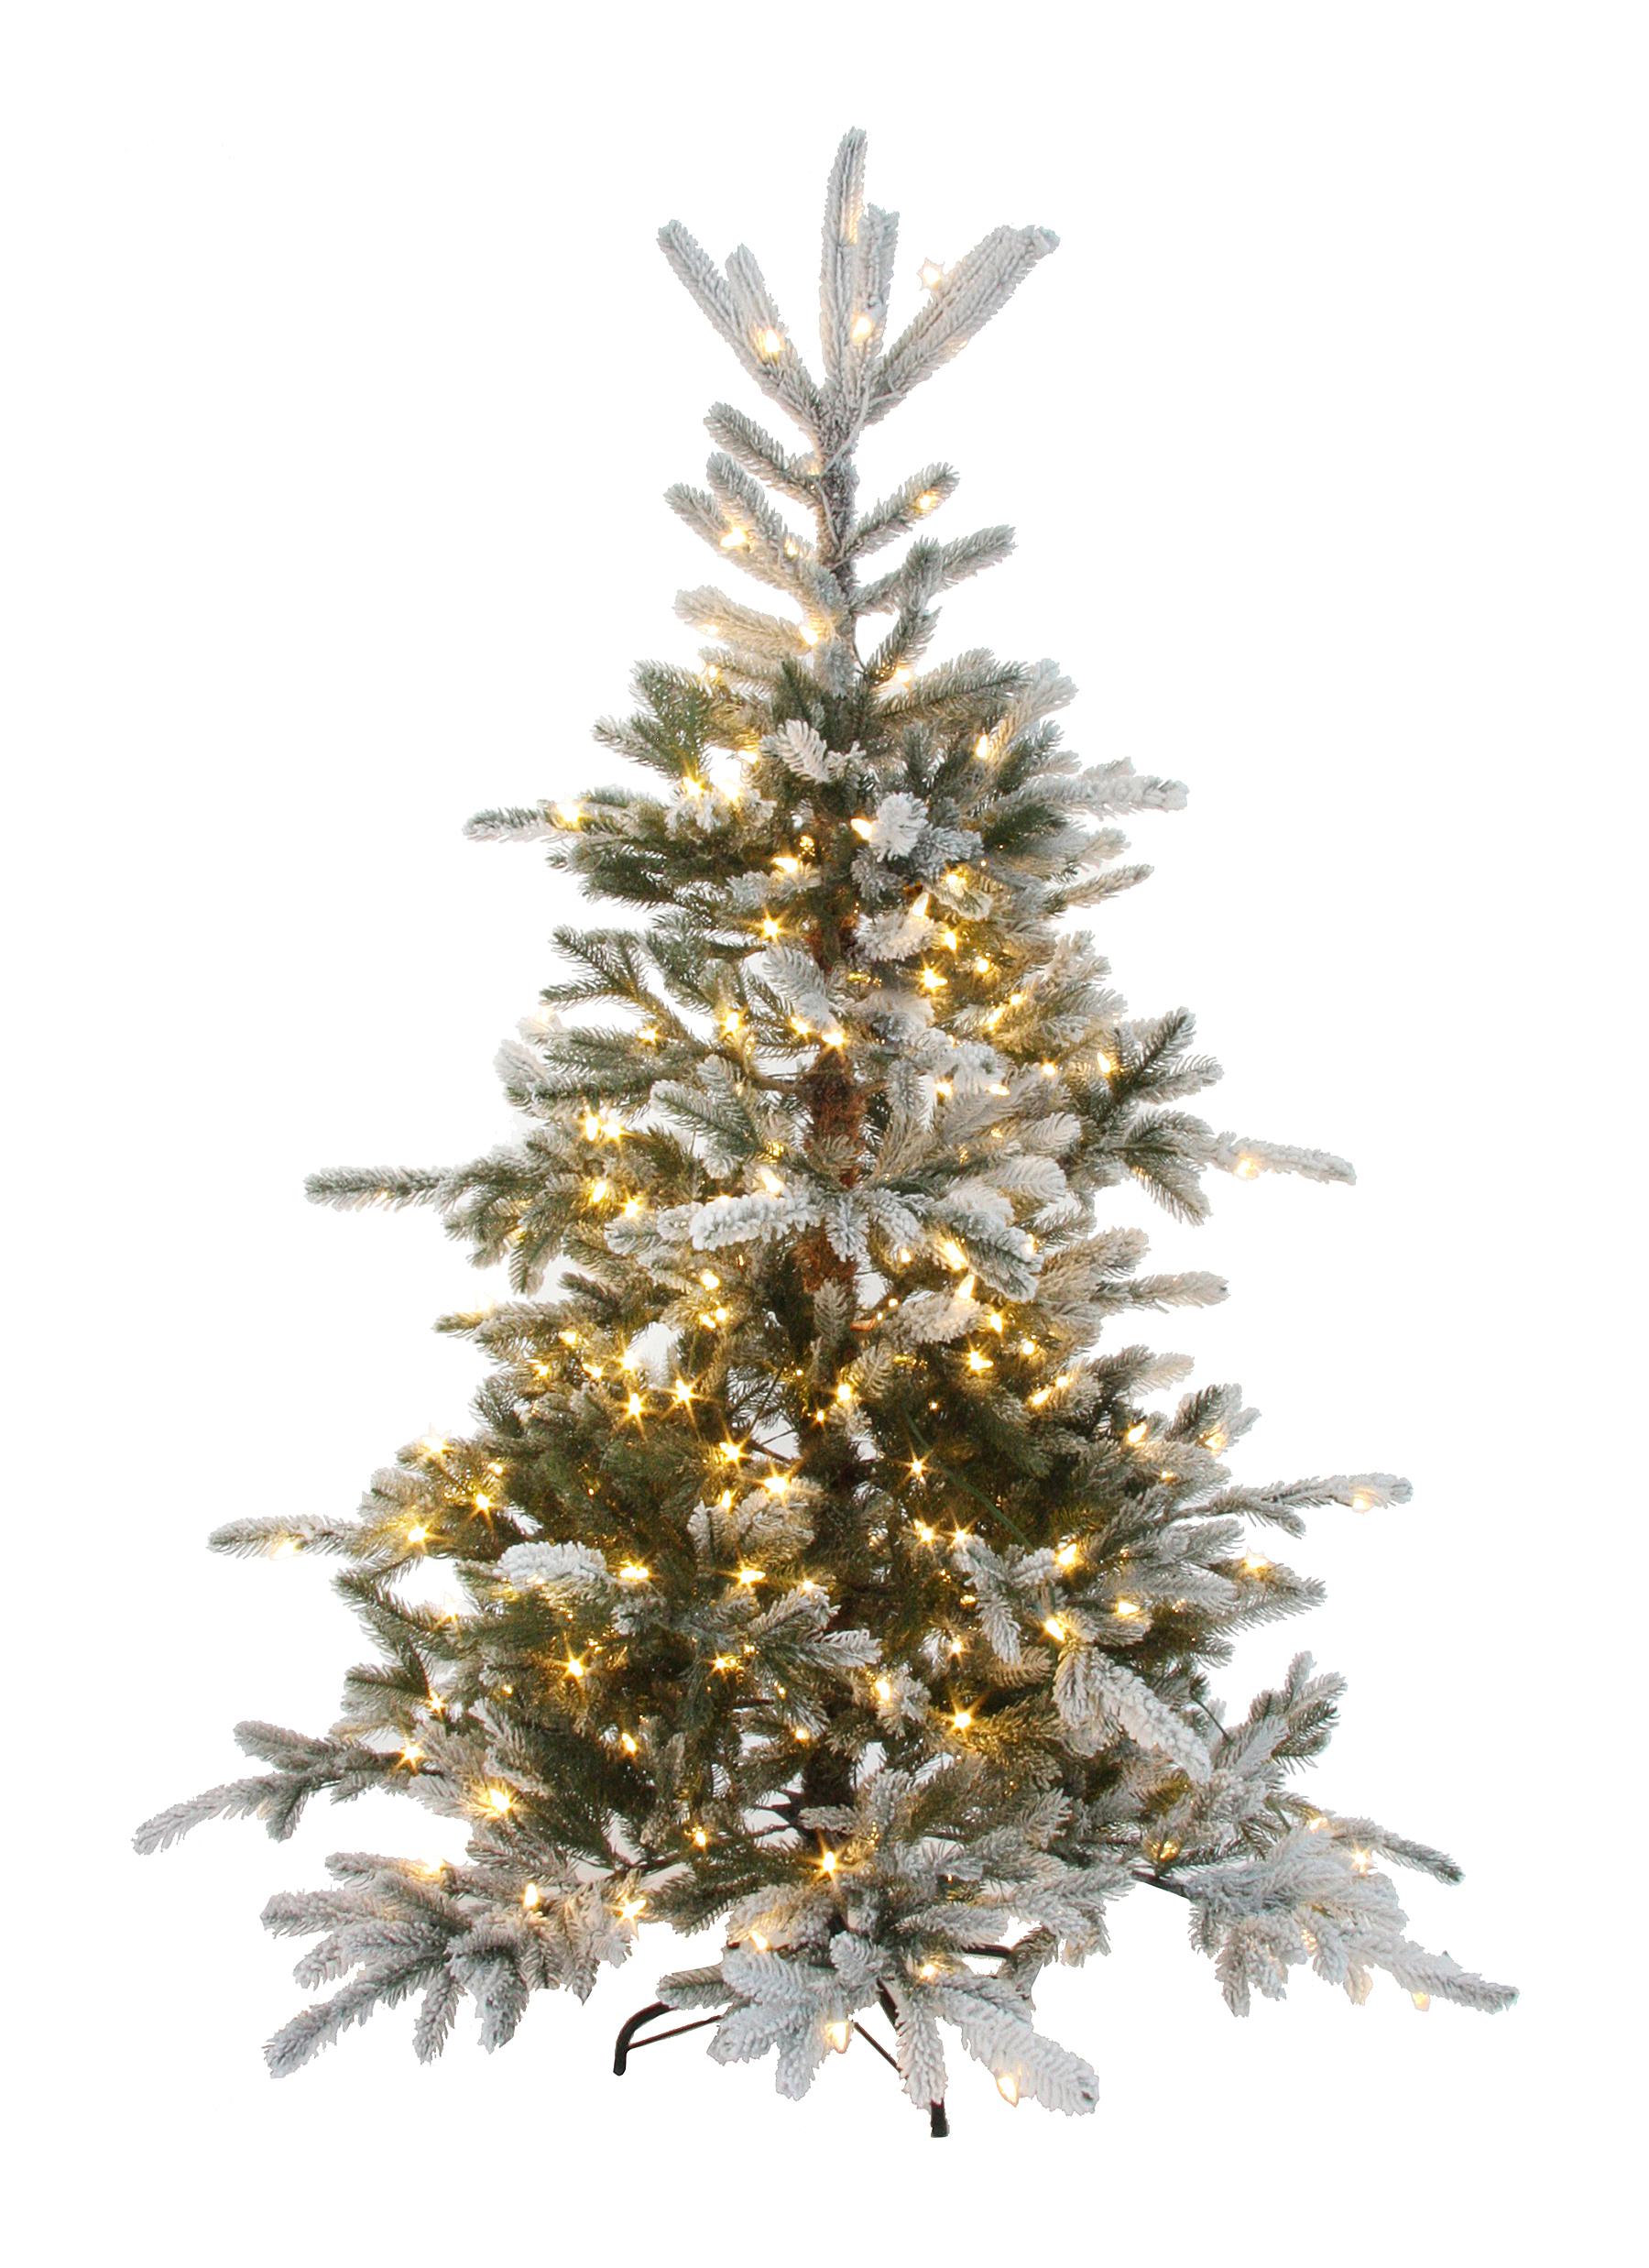 DECORATIVE SNOW-COVERED LED LIGHTS FIR CHRISTMAS TREE